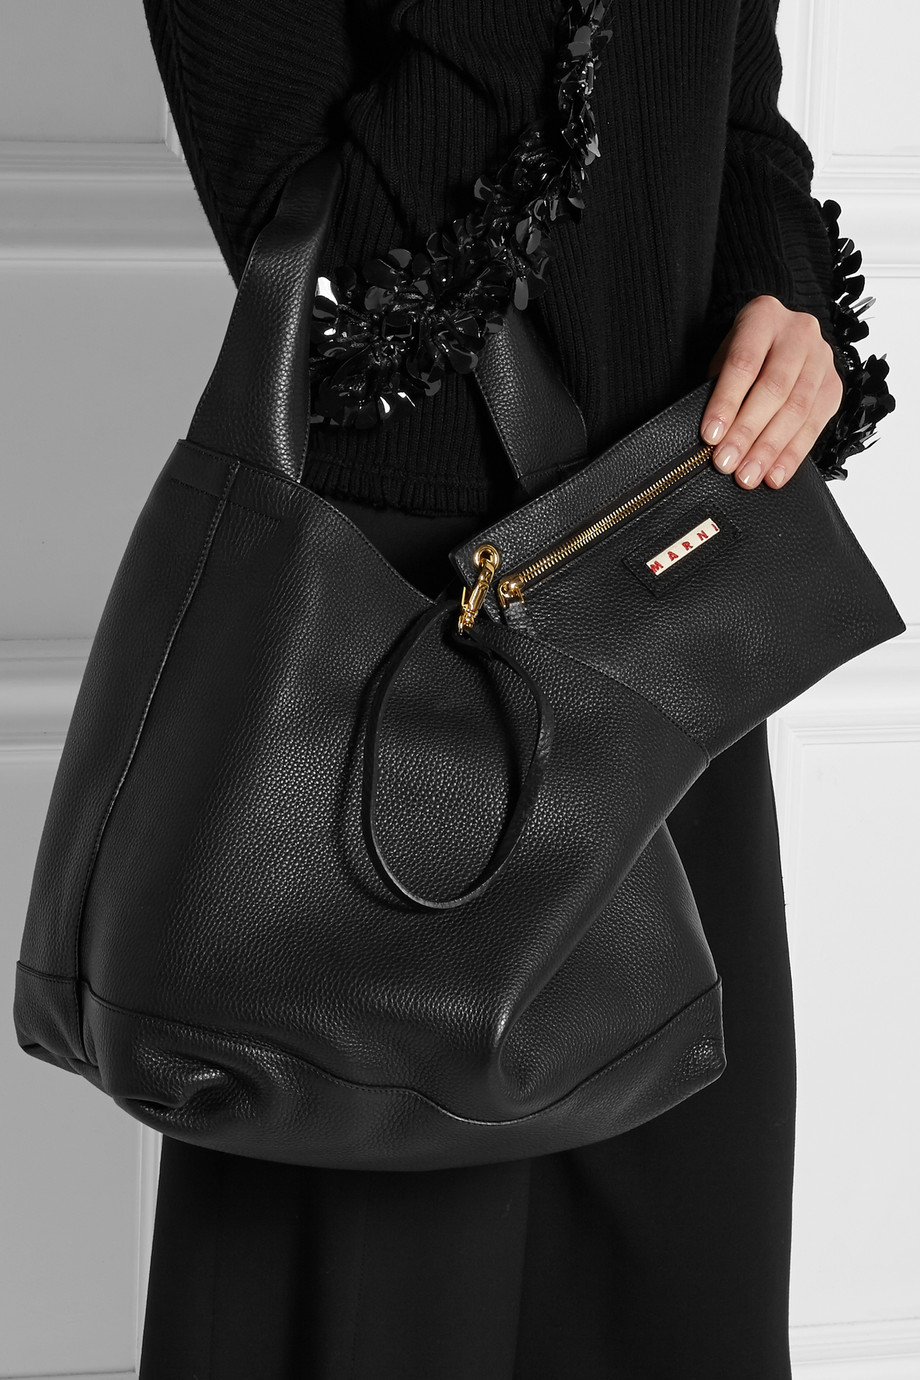 Marni Hobo Medium Textured-Leather Shoulder Bag in Black - Lyst